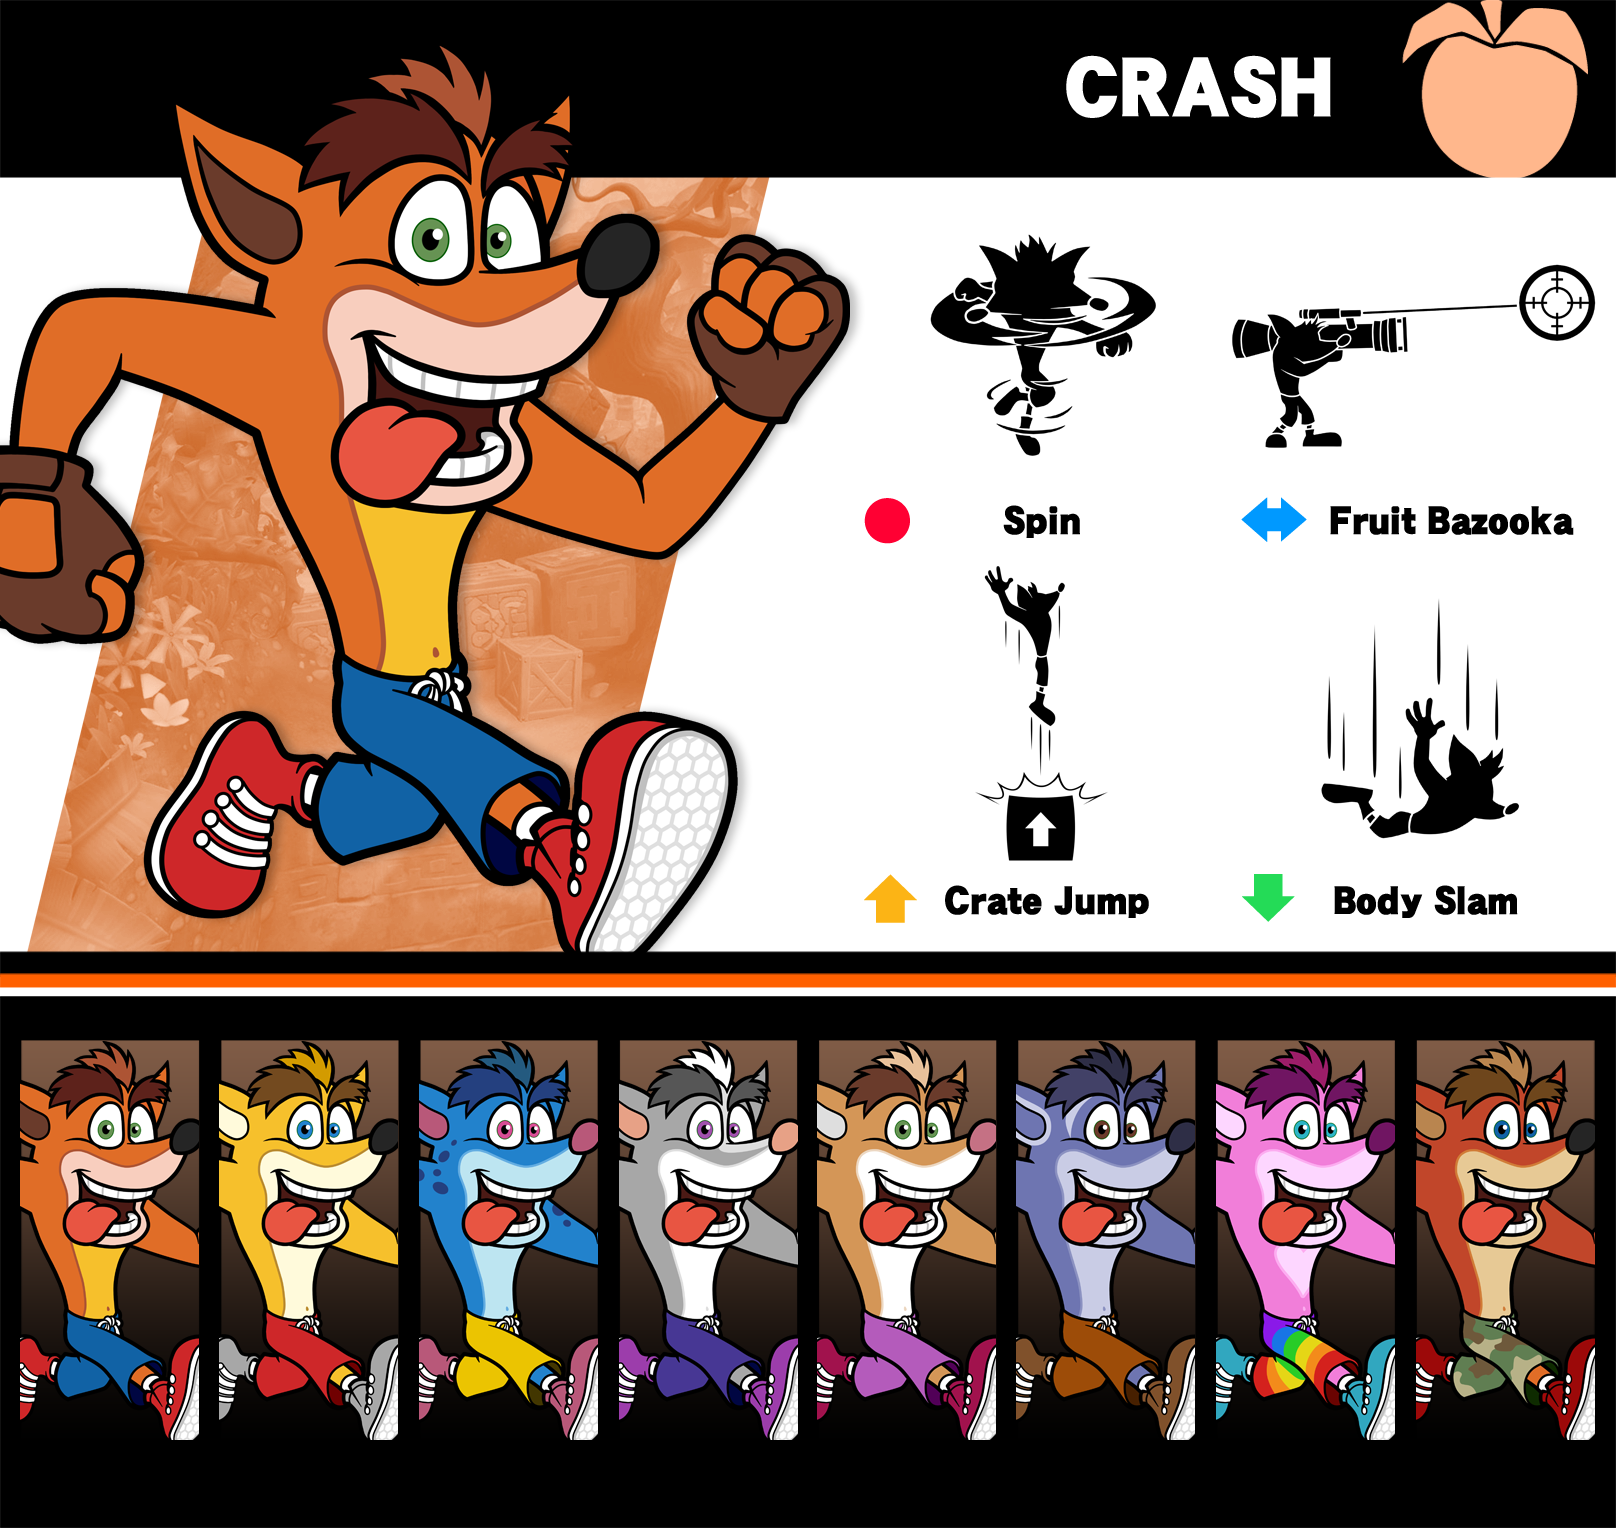 Crash in Smash